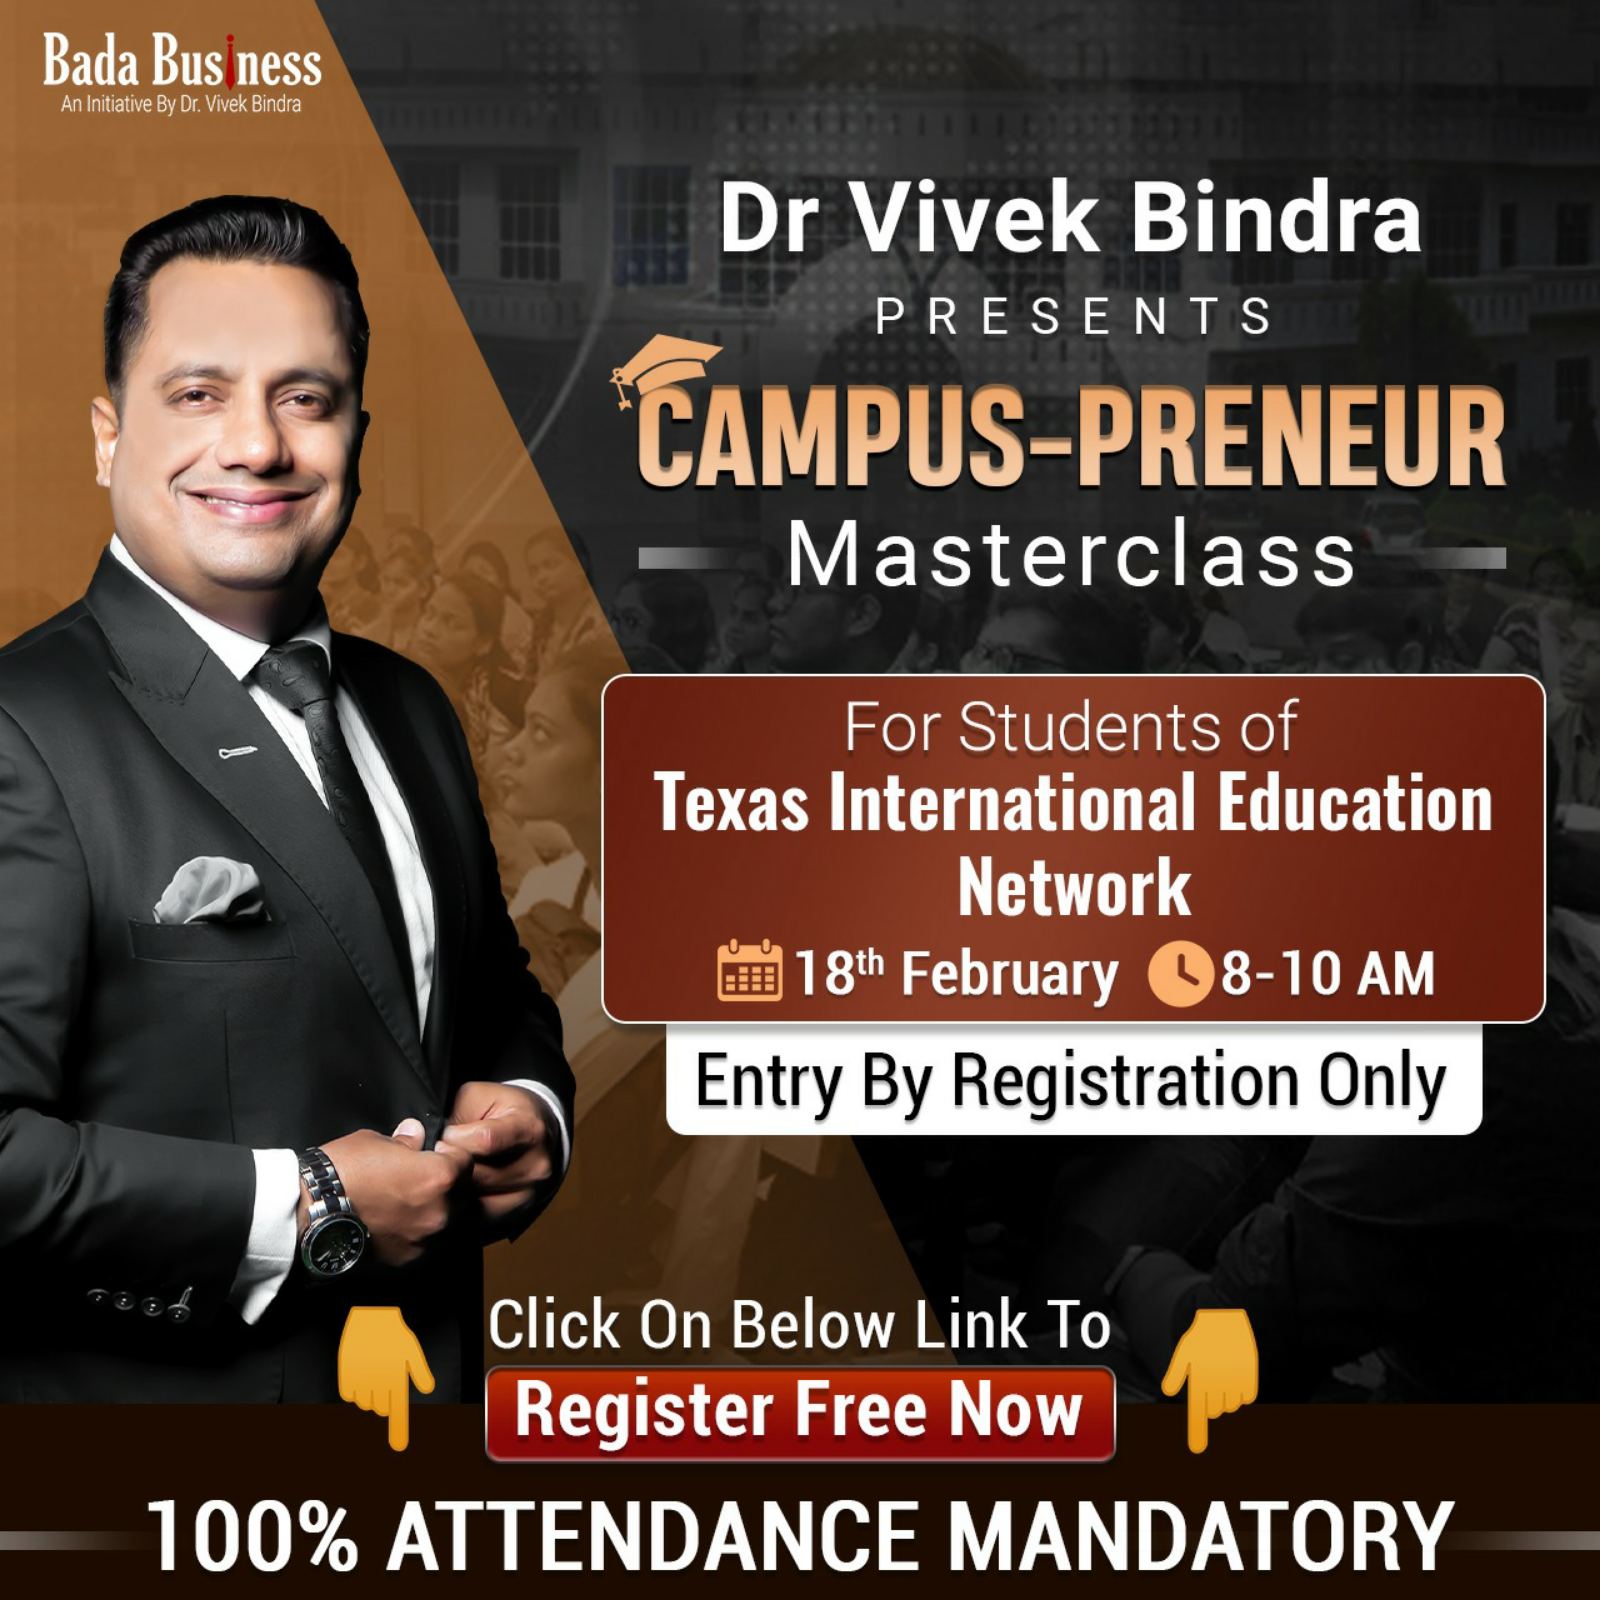 “Campus-preneur” webinar session with Dr.Vivek Bindra